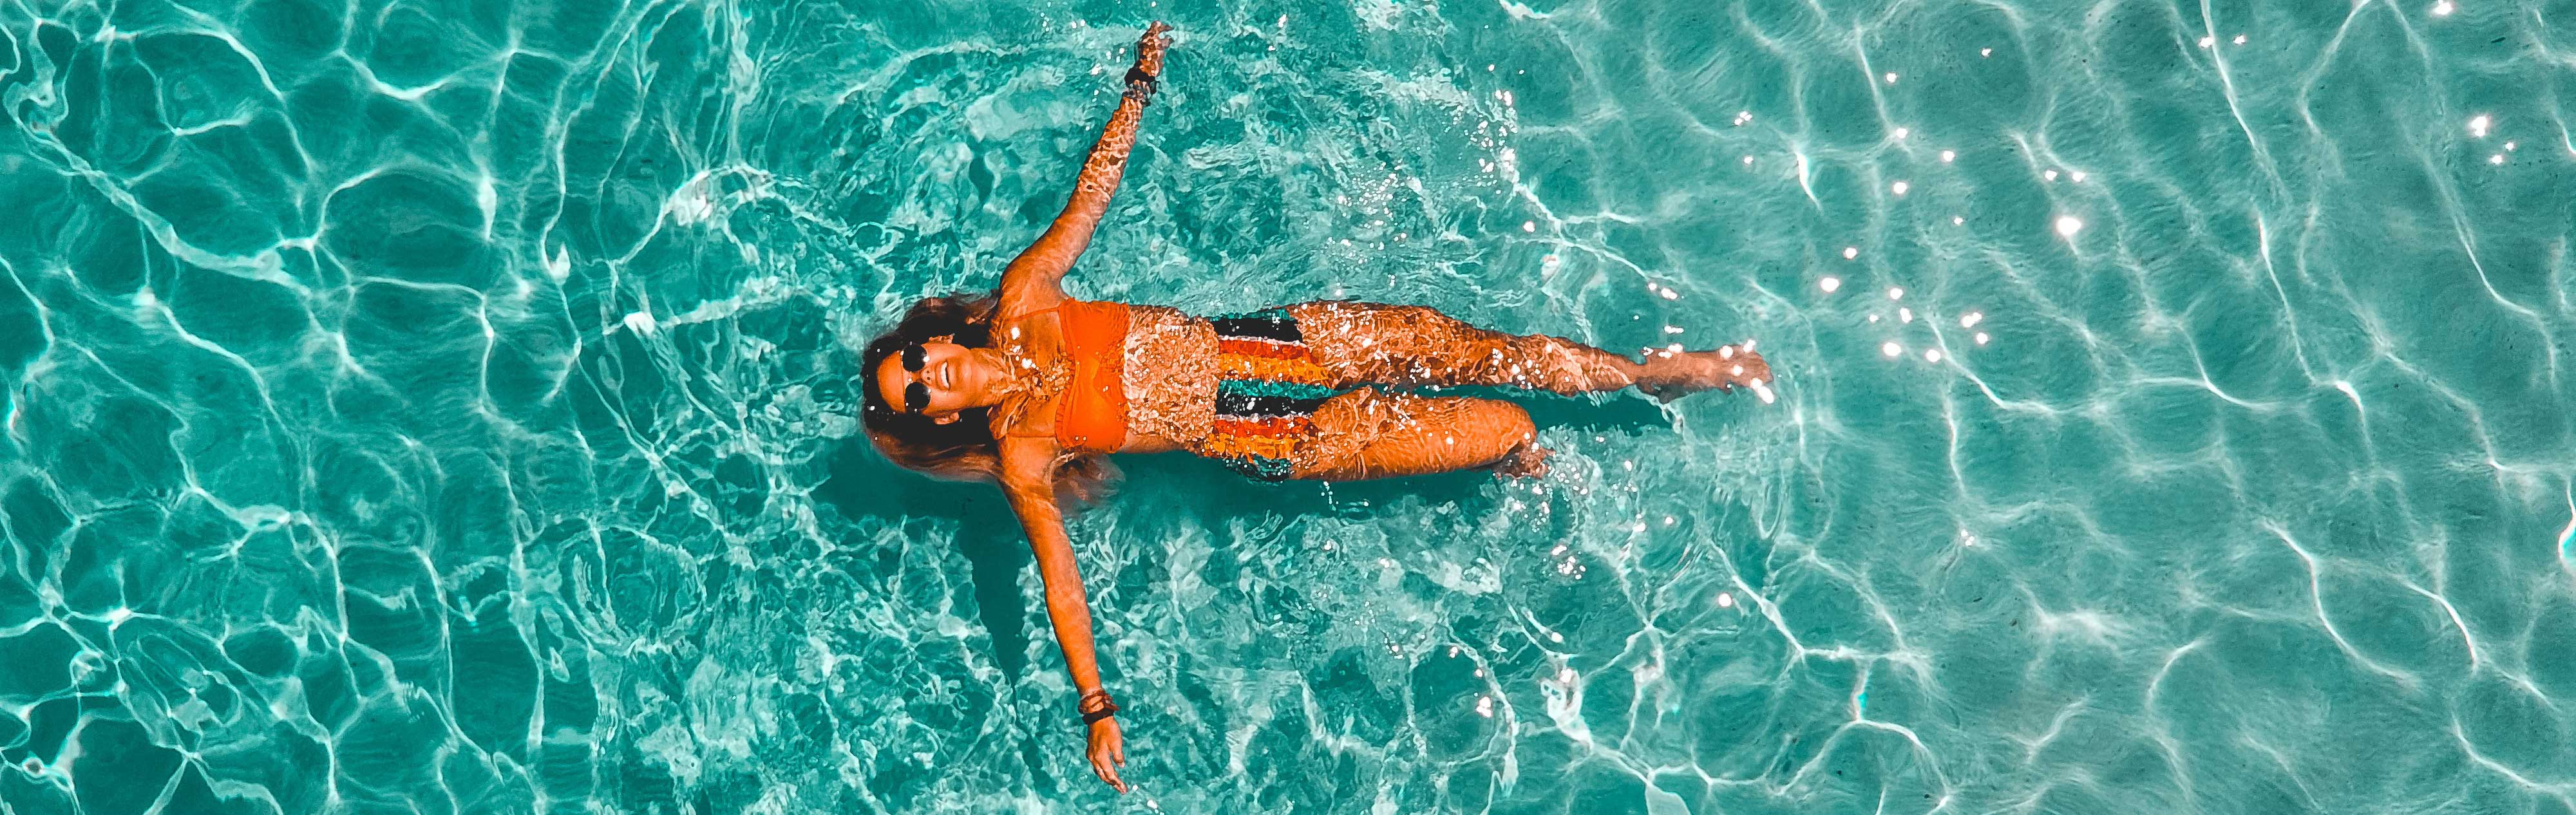 Frau im Bikini schwimmt im Pool